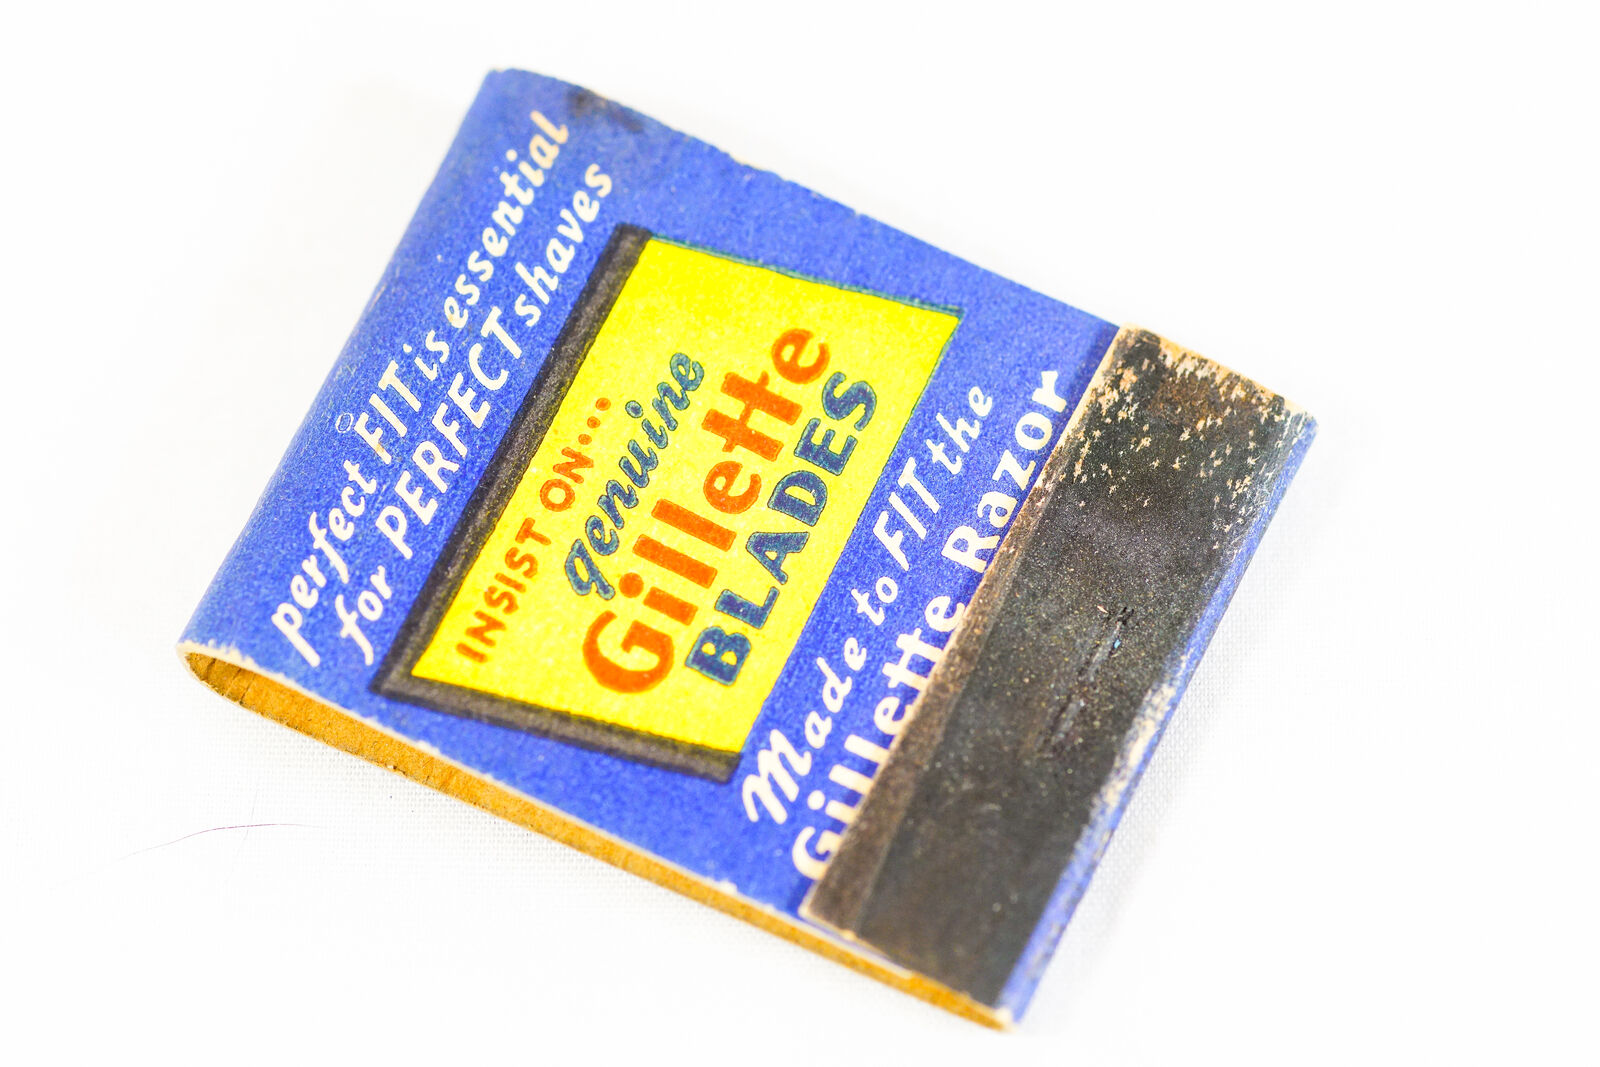 1930s GILLETTE Razor Blades FULL UNUSED Matchbook Cover Advertising